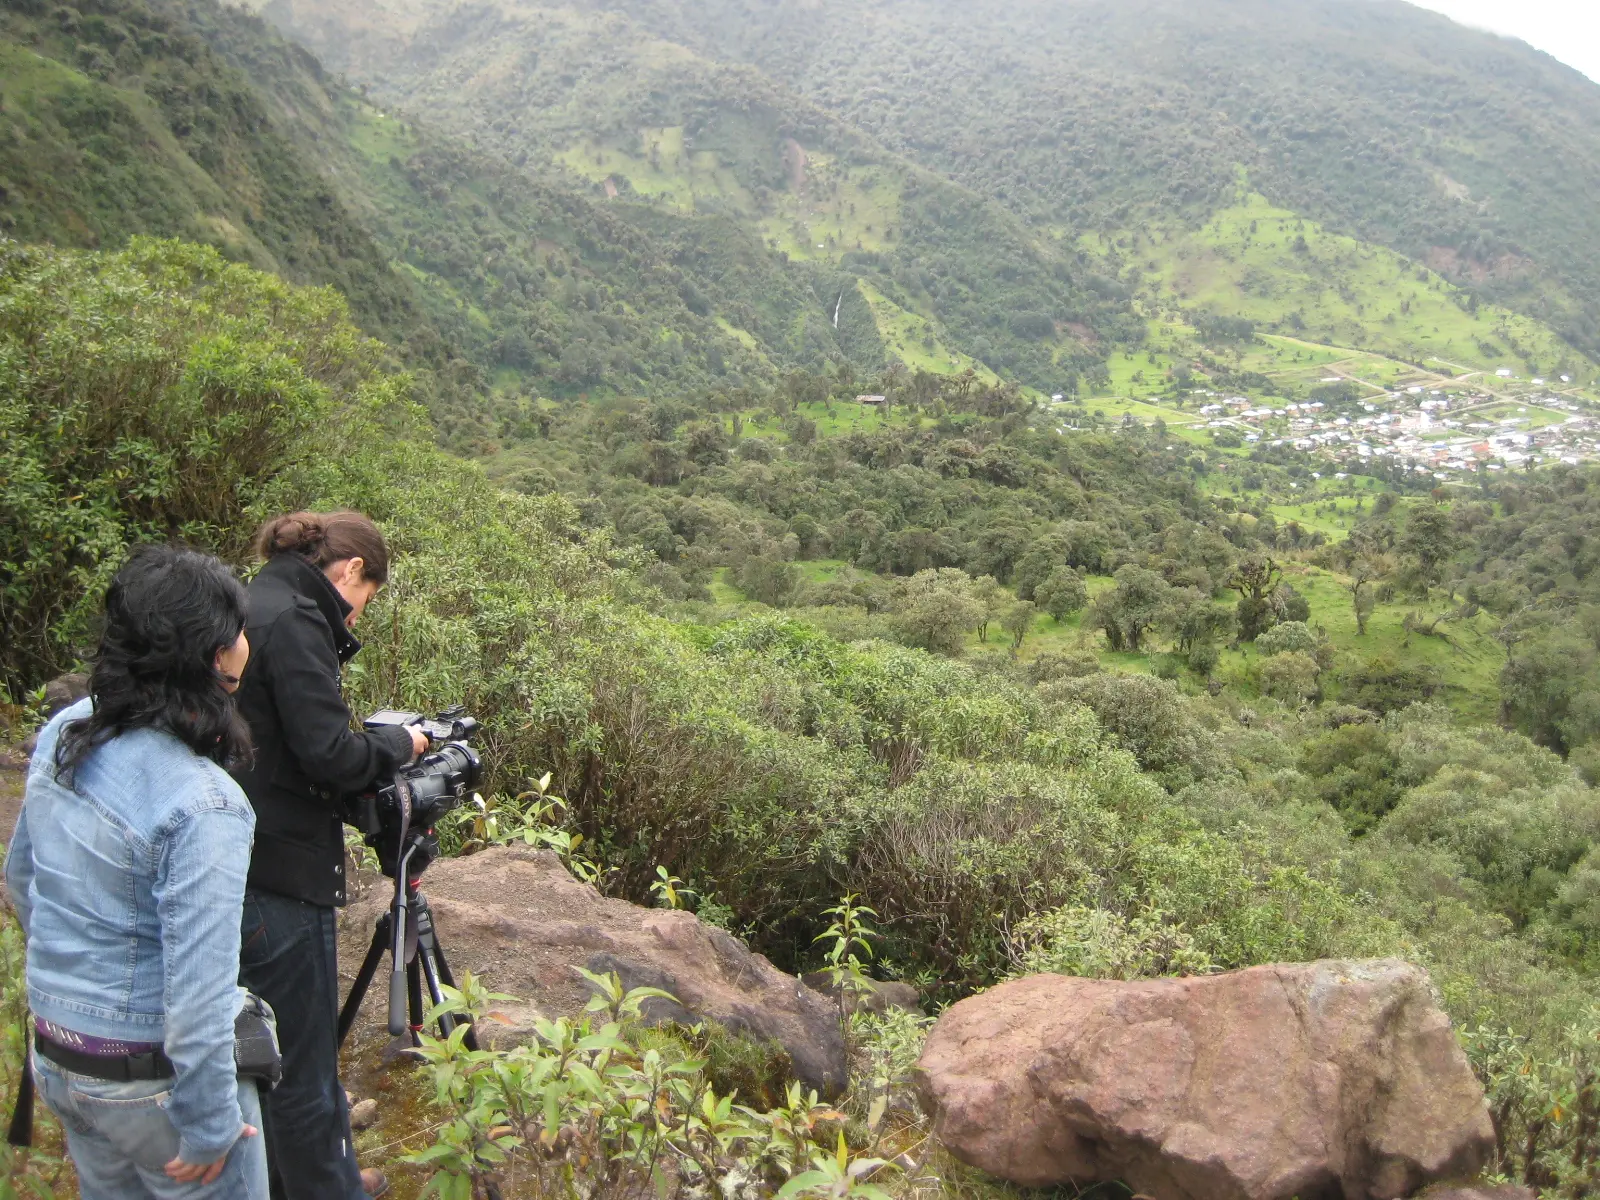 Filming landscapes of the Guayllabamba basin, Ecuador